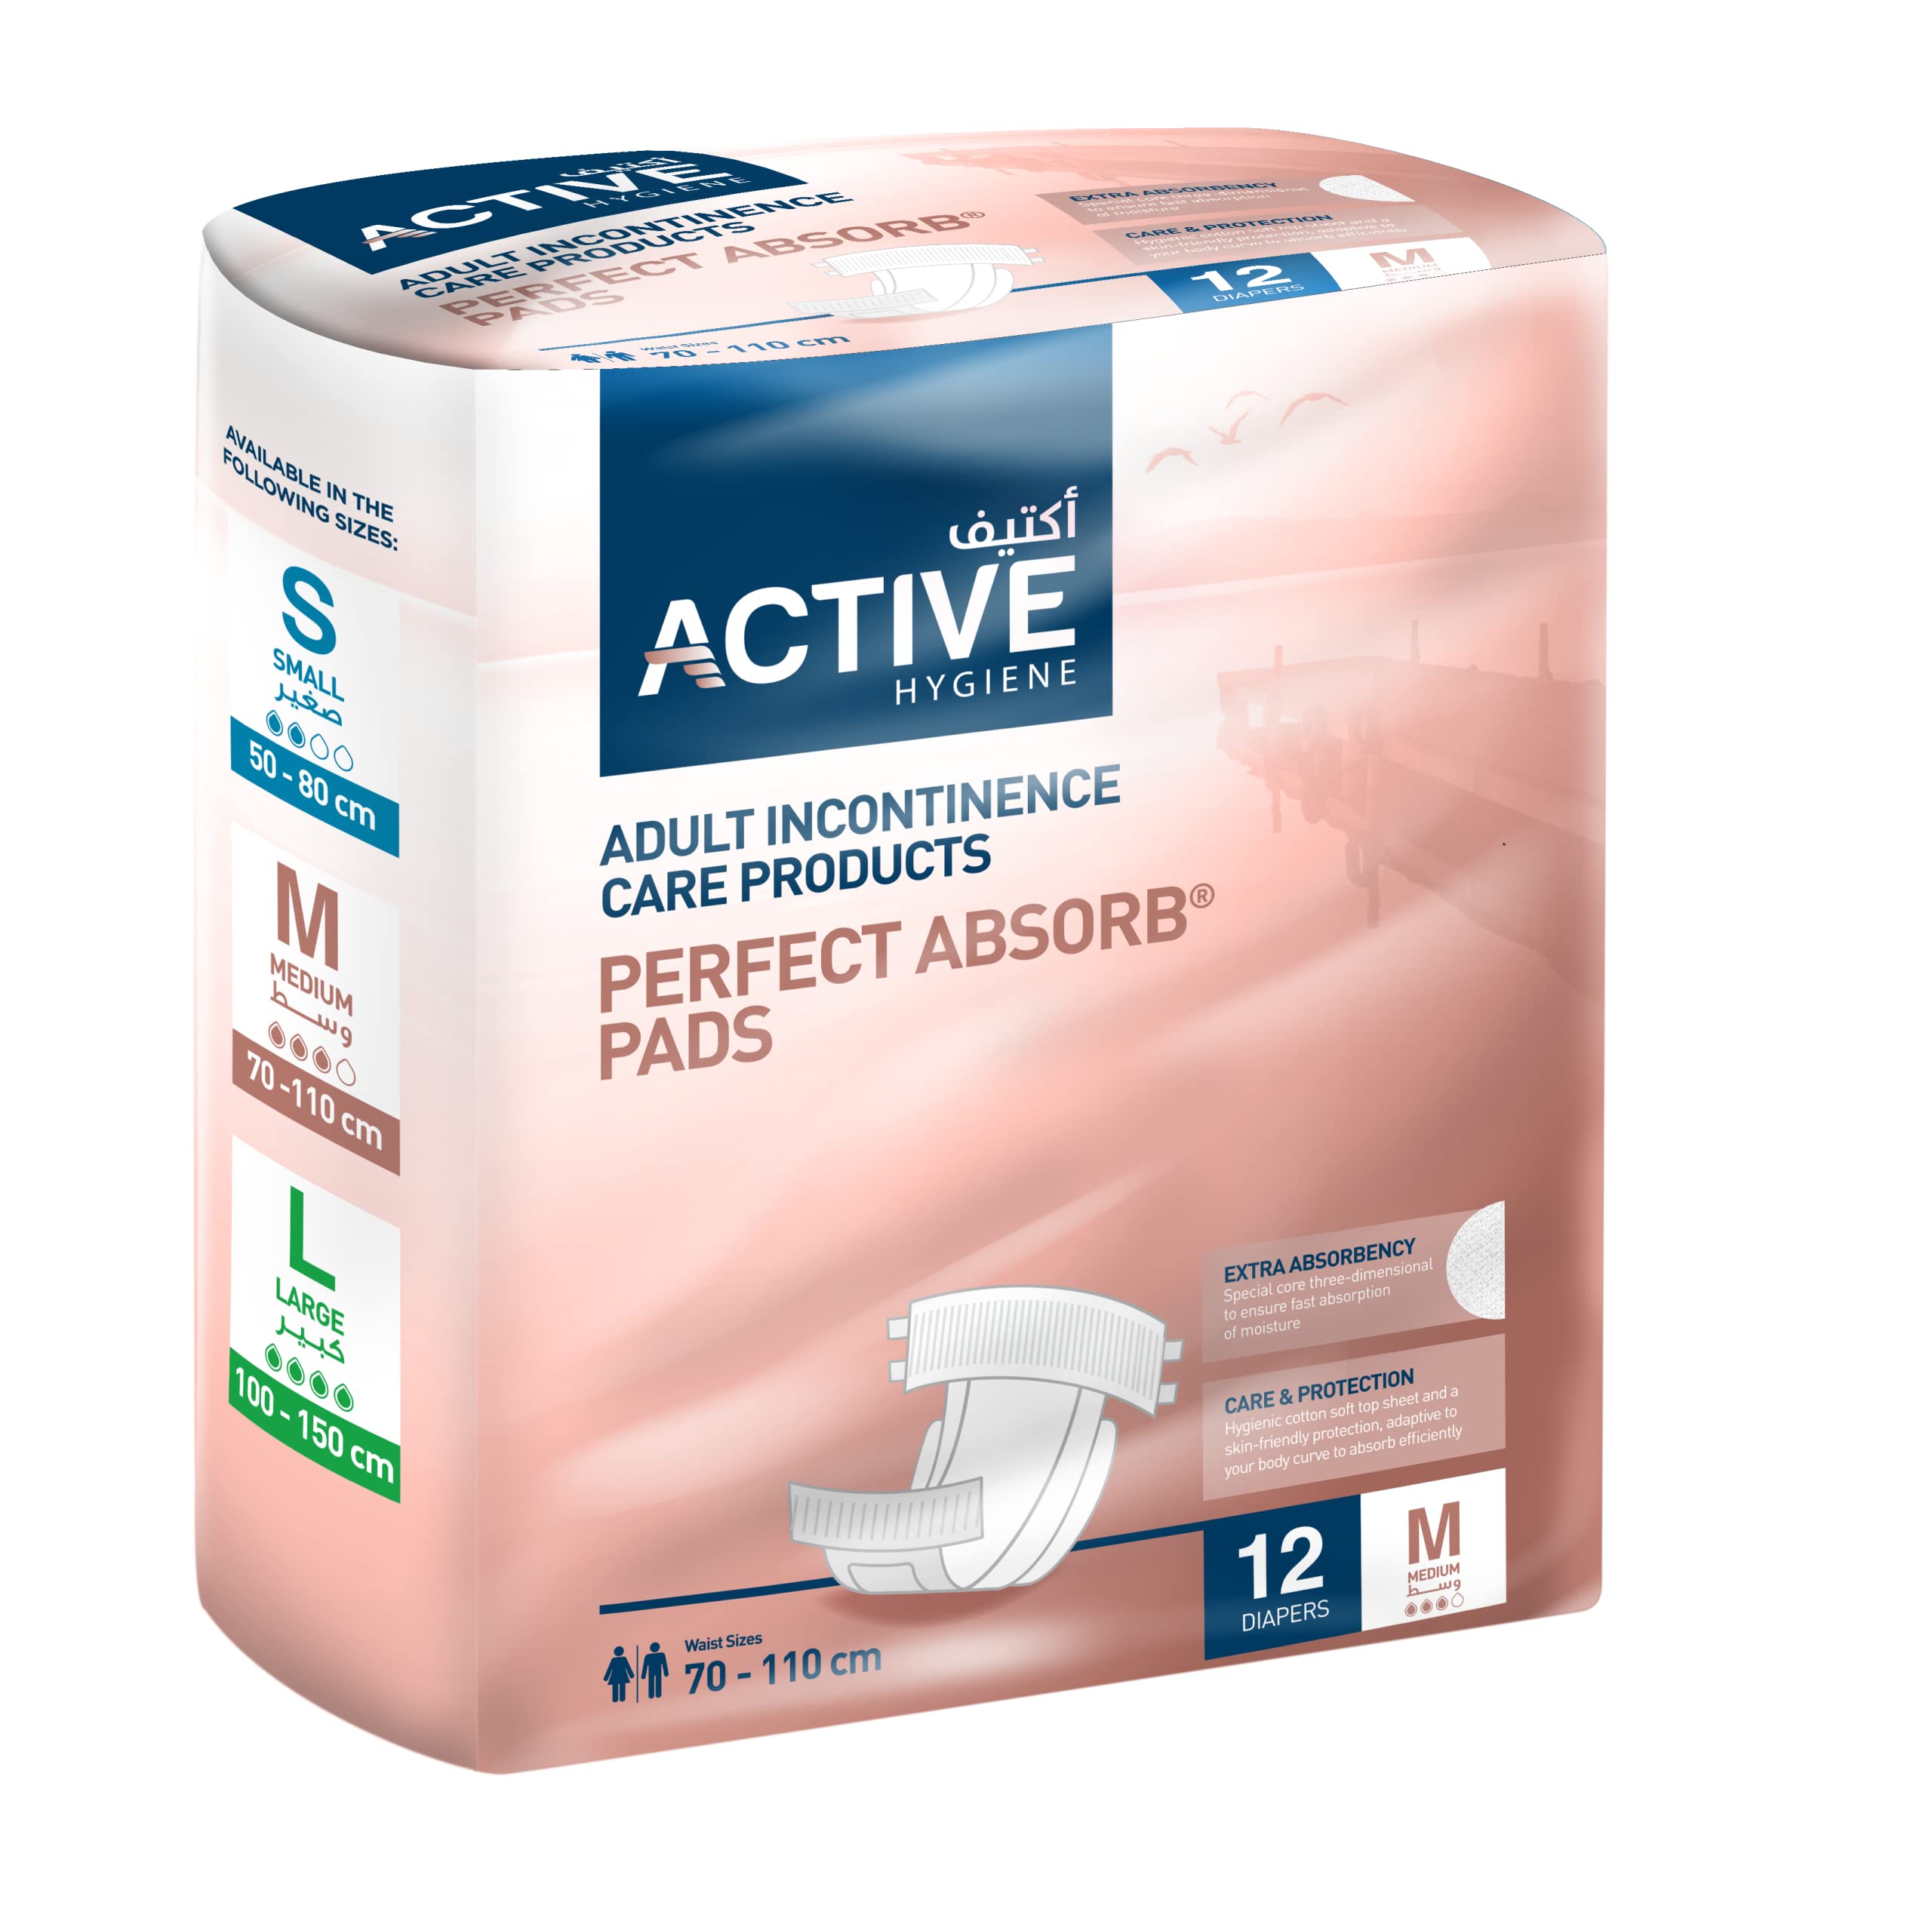 Molicare Premium 165274 Elastic Diaper XL 14's – Medicina Online